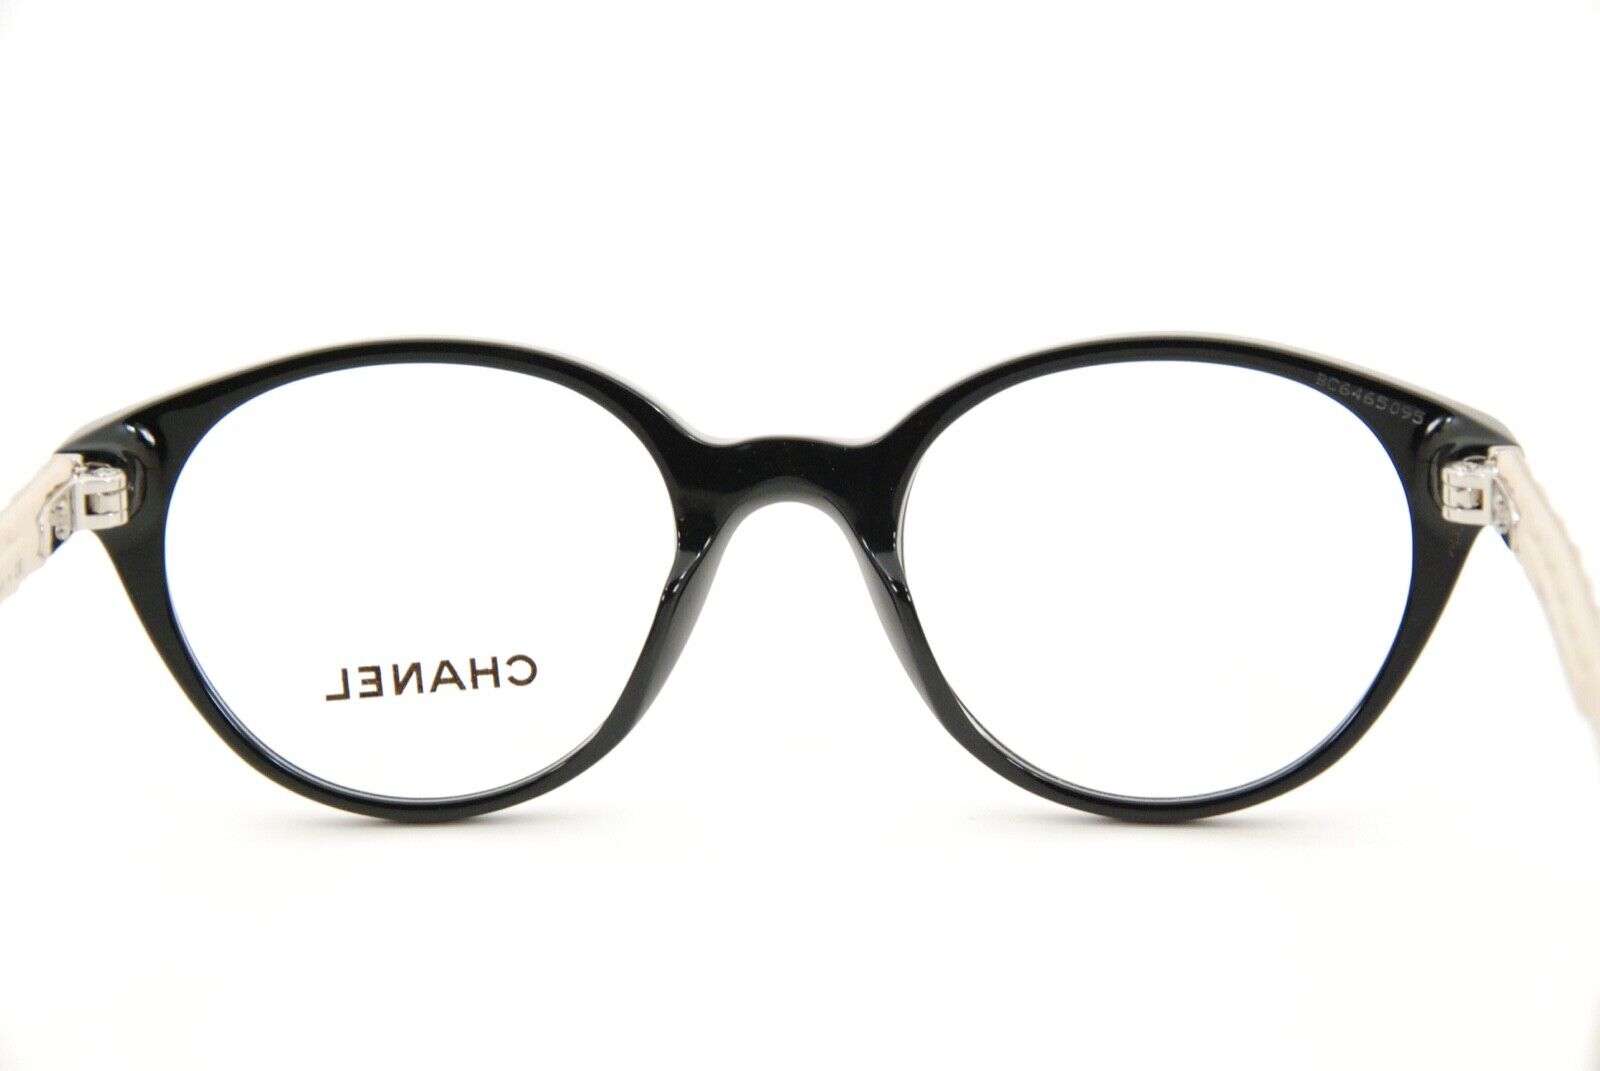 Chanel sunglasses 5064-b black - Gem